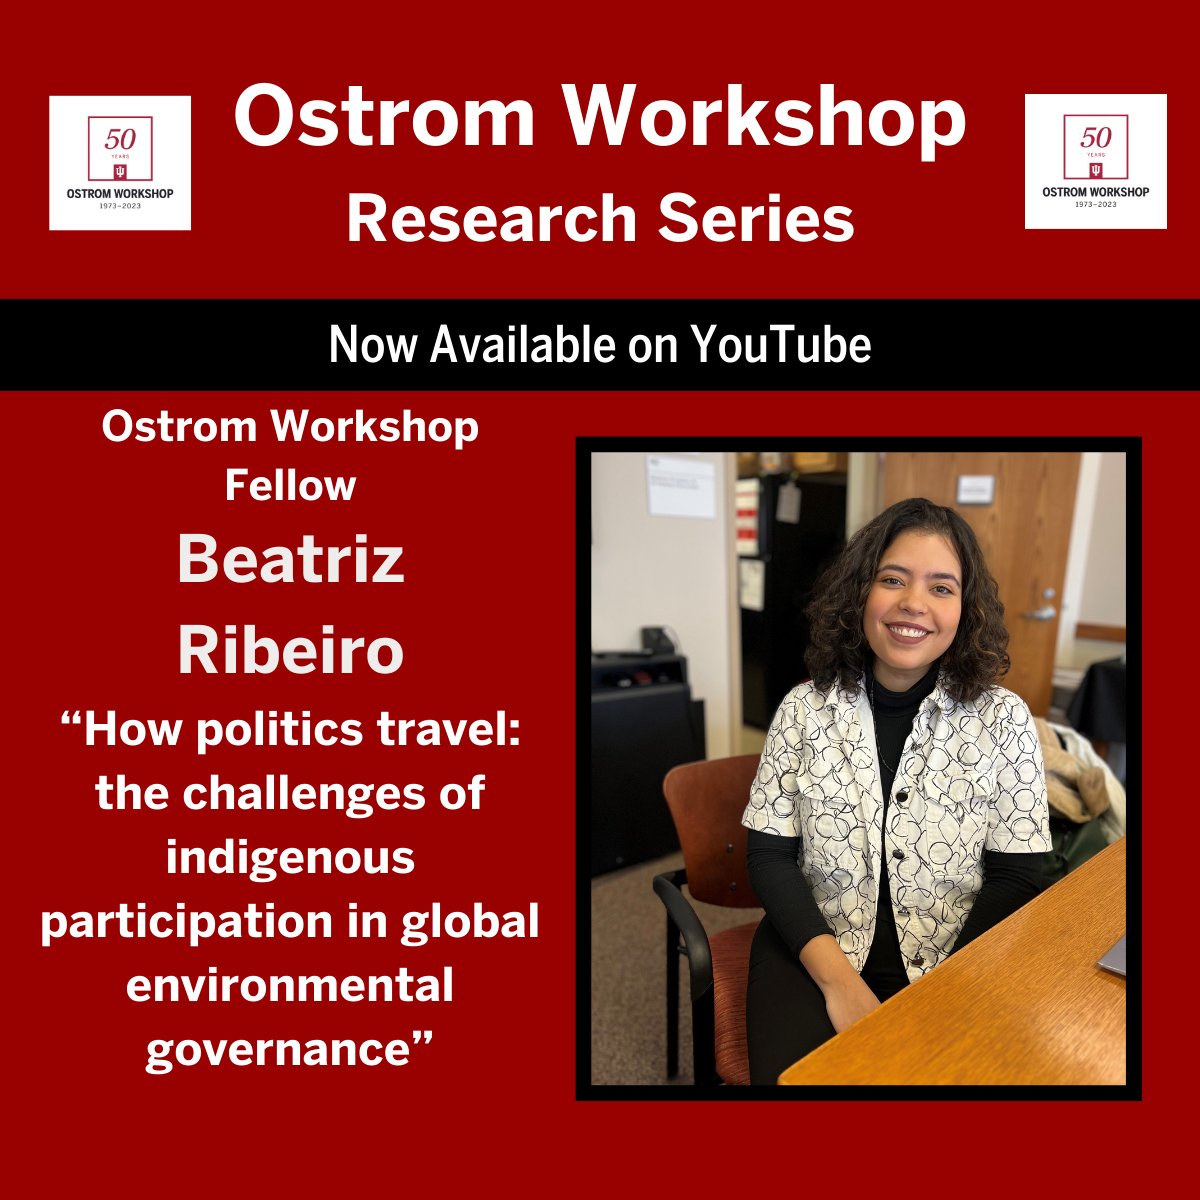 Beatriz Ribeiro! Great job - catch her talk today youtube.com/watch?v=6vZL_o…